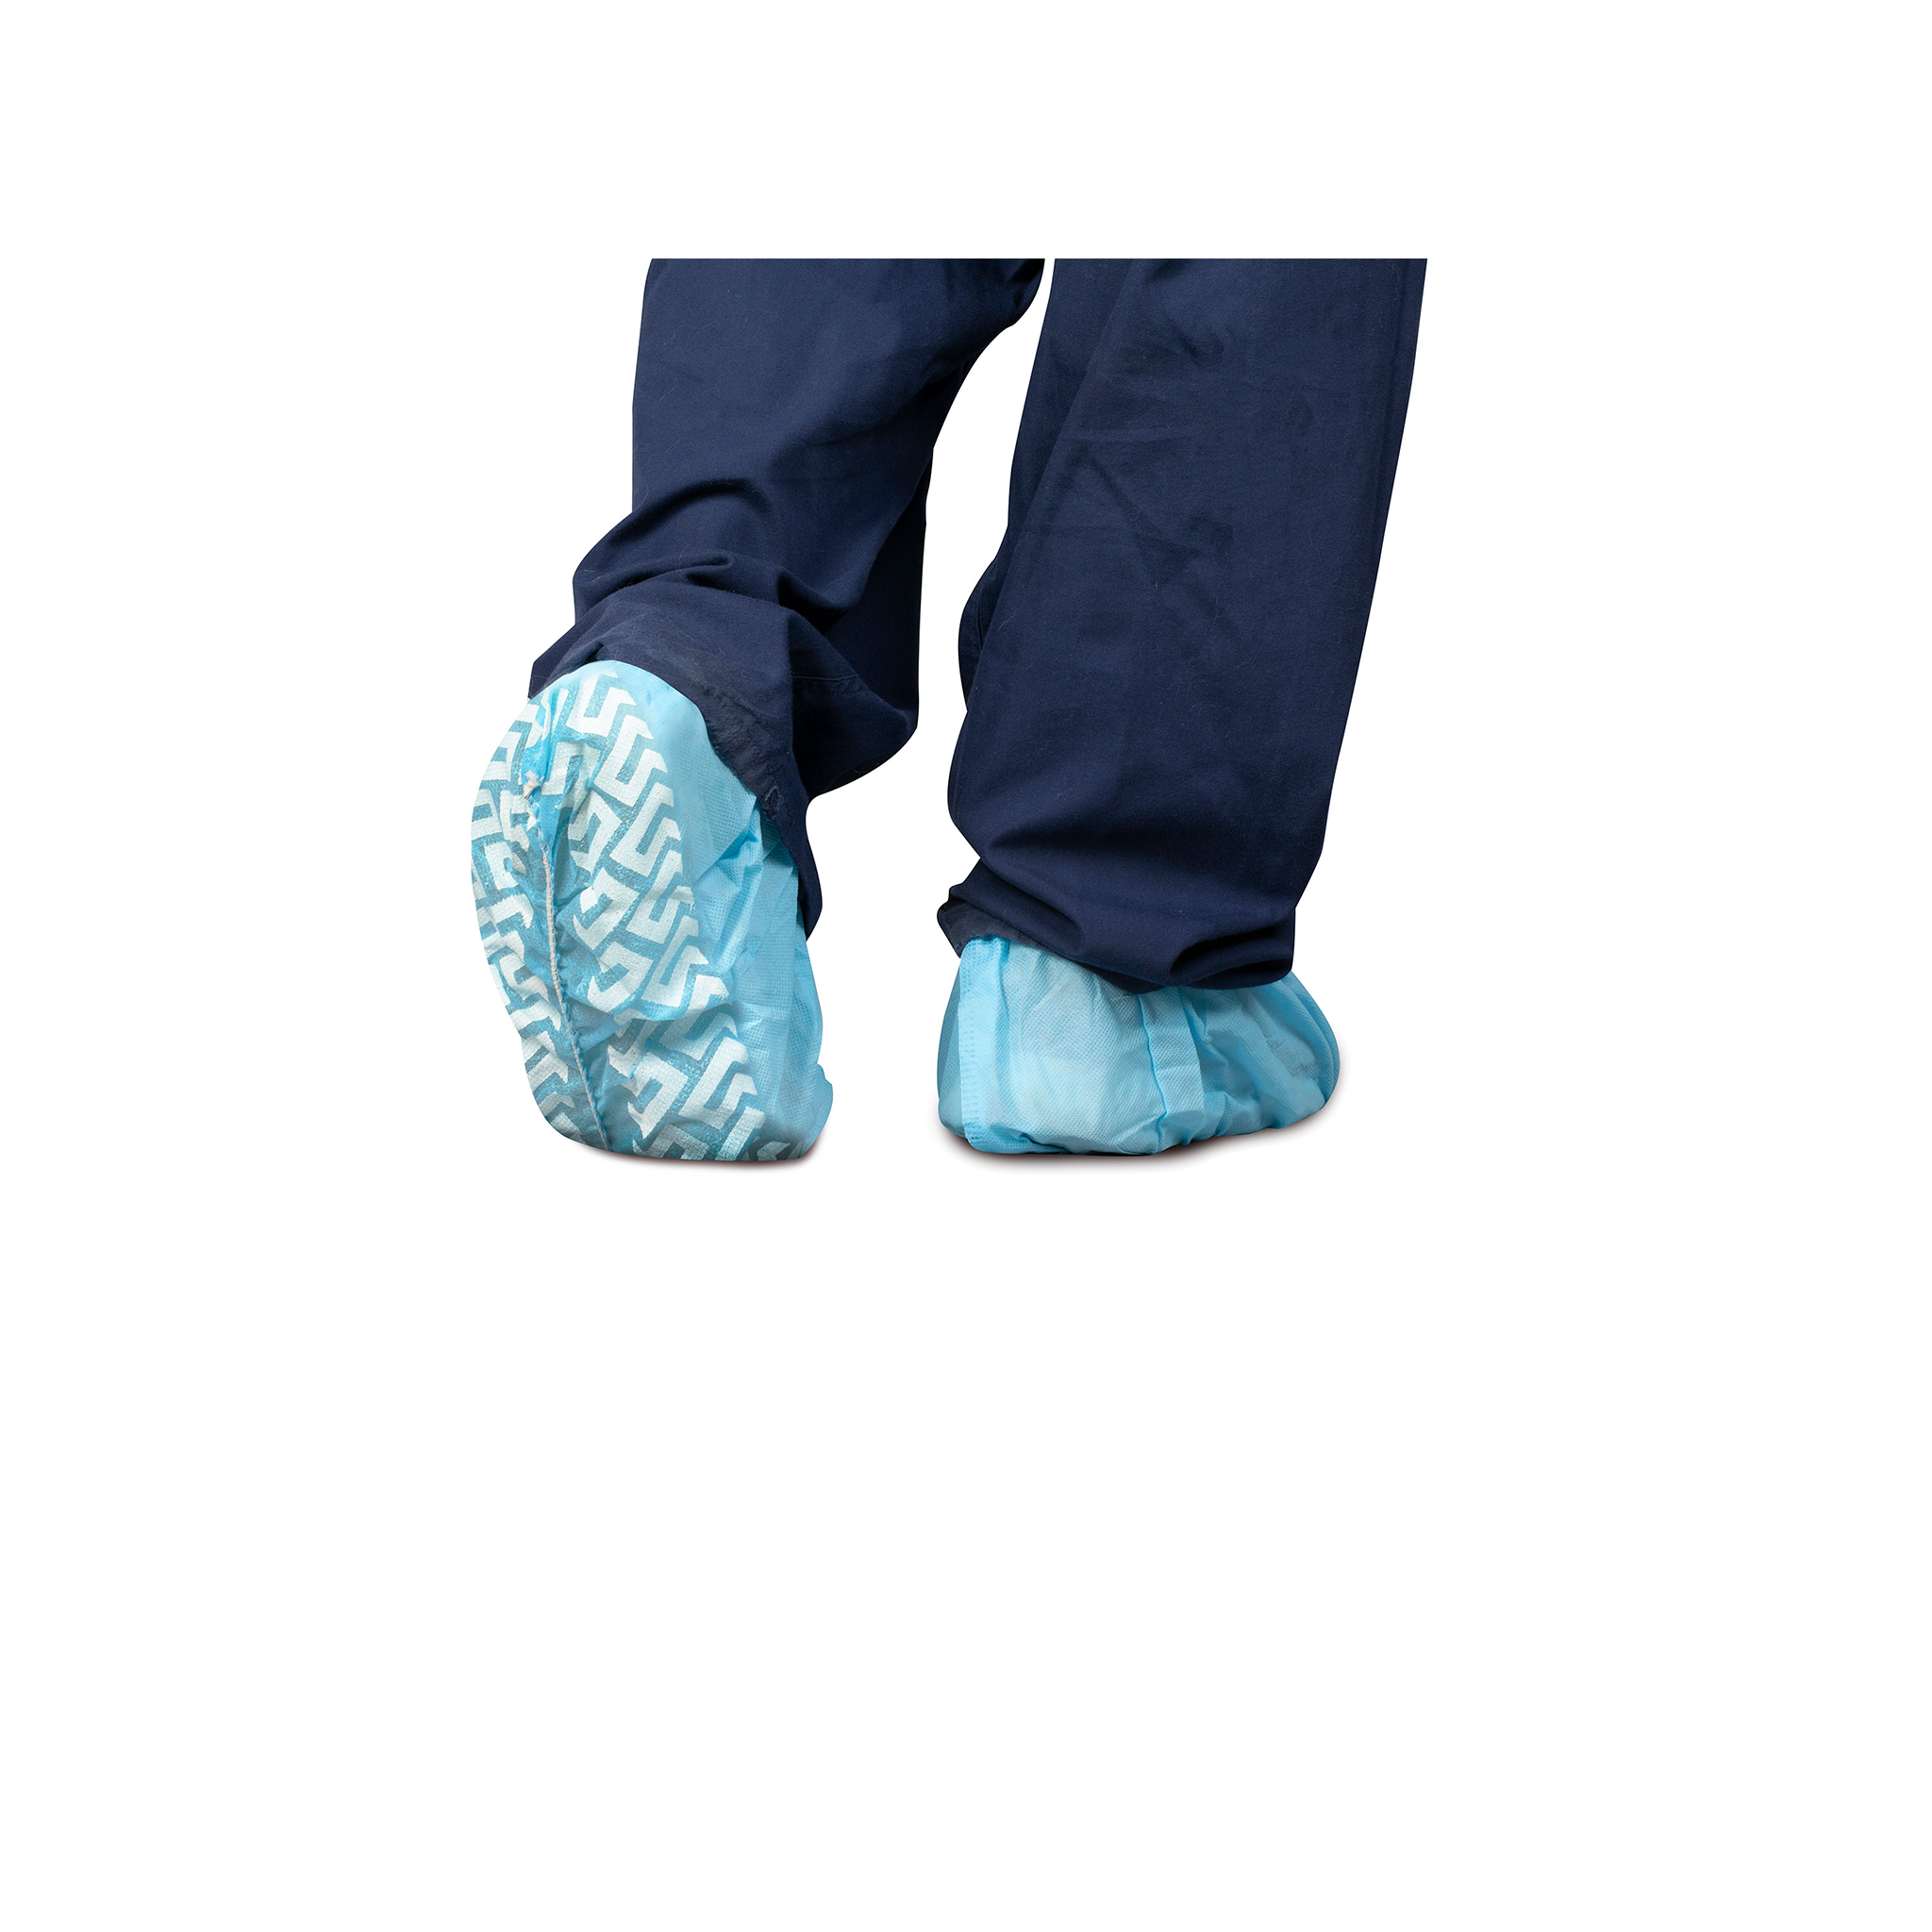 Dukal Non-Skid Shoe Covers - 100 pcs, Blue, One-Size